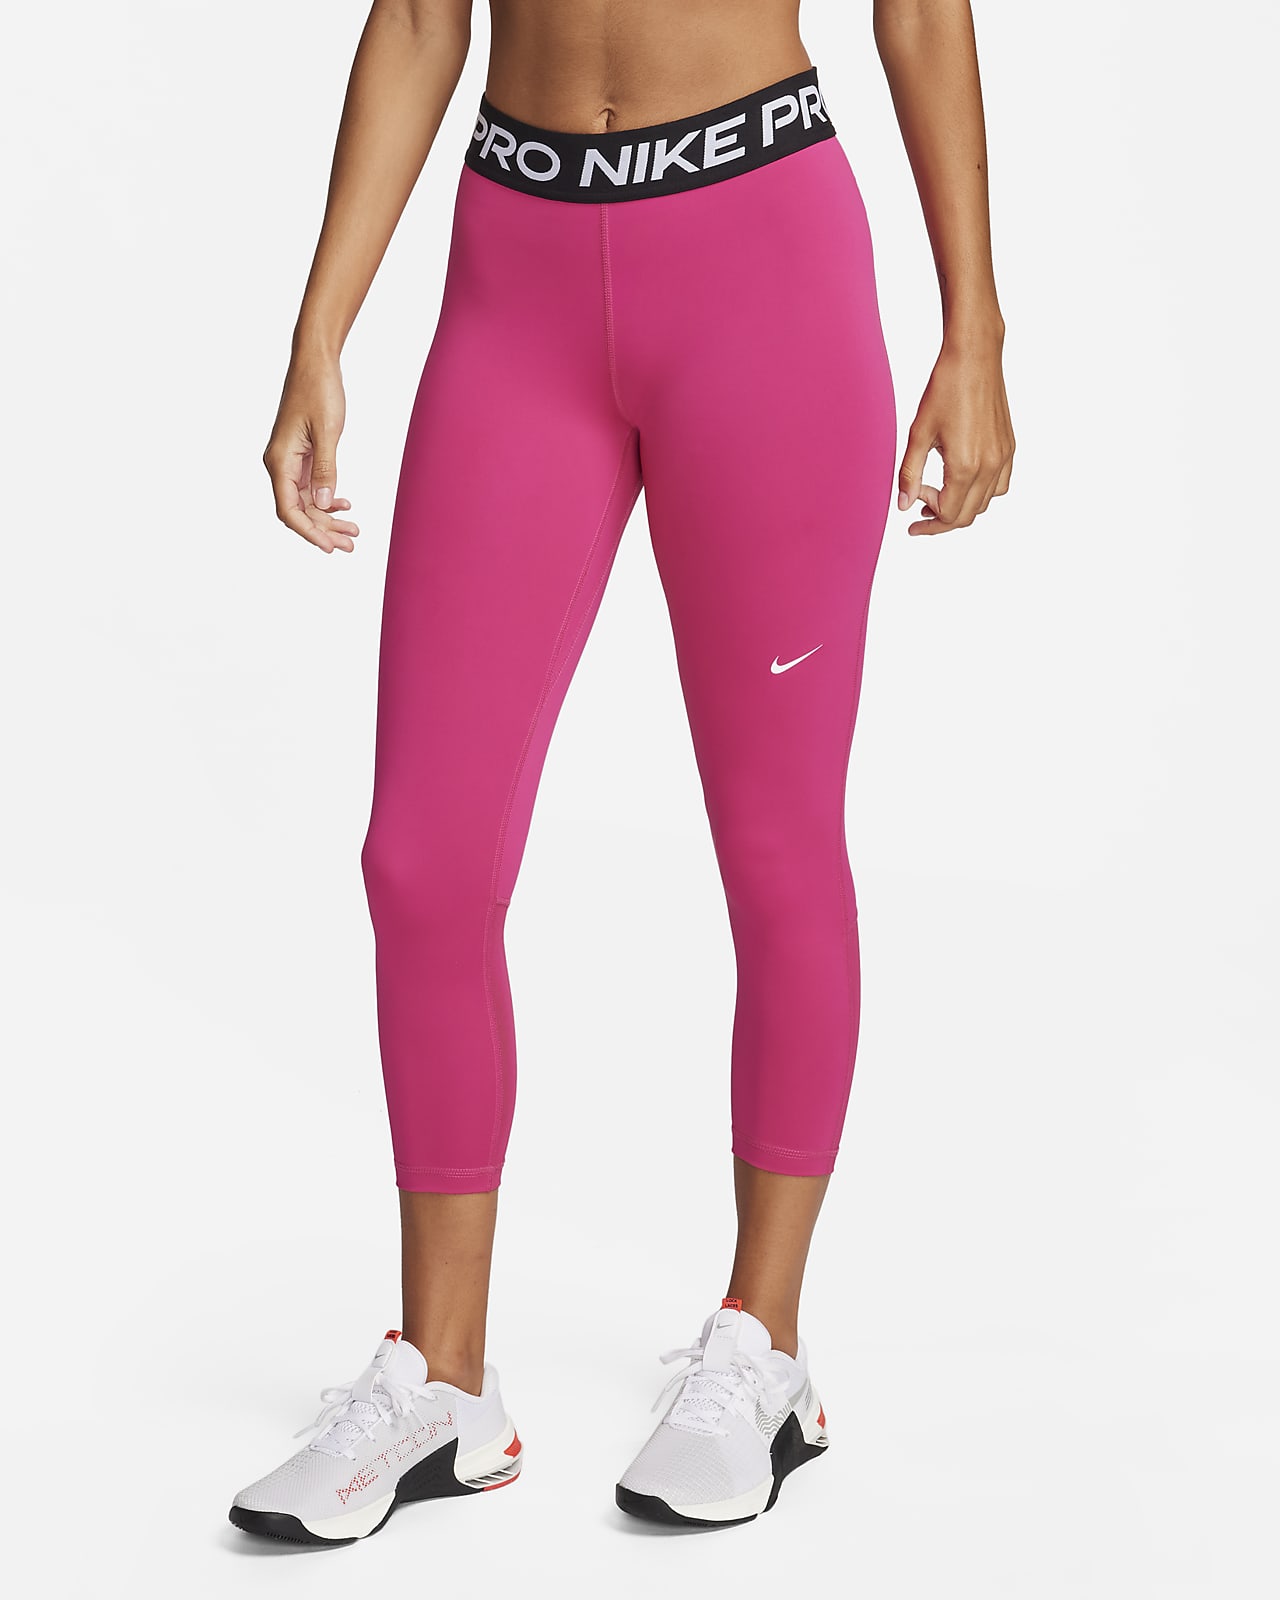 Nike Pro Collant Short 365 - Fuchsia/Blanc Femme